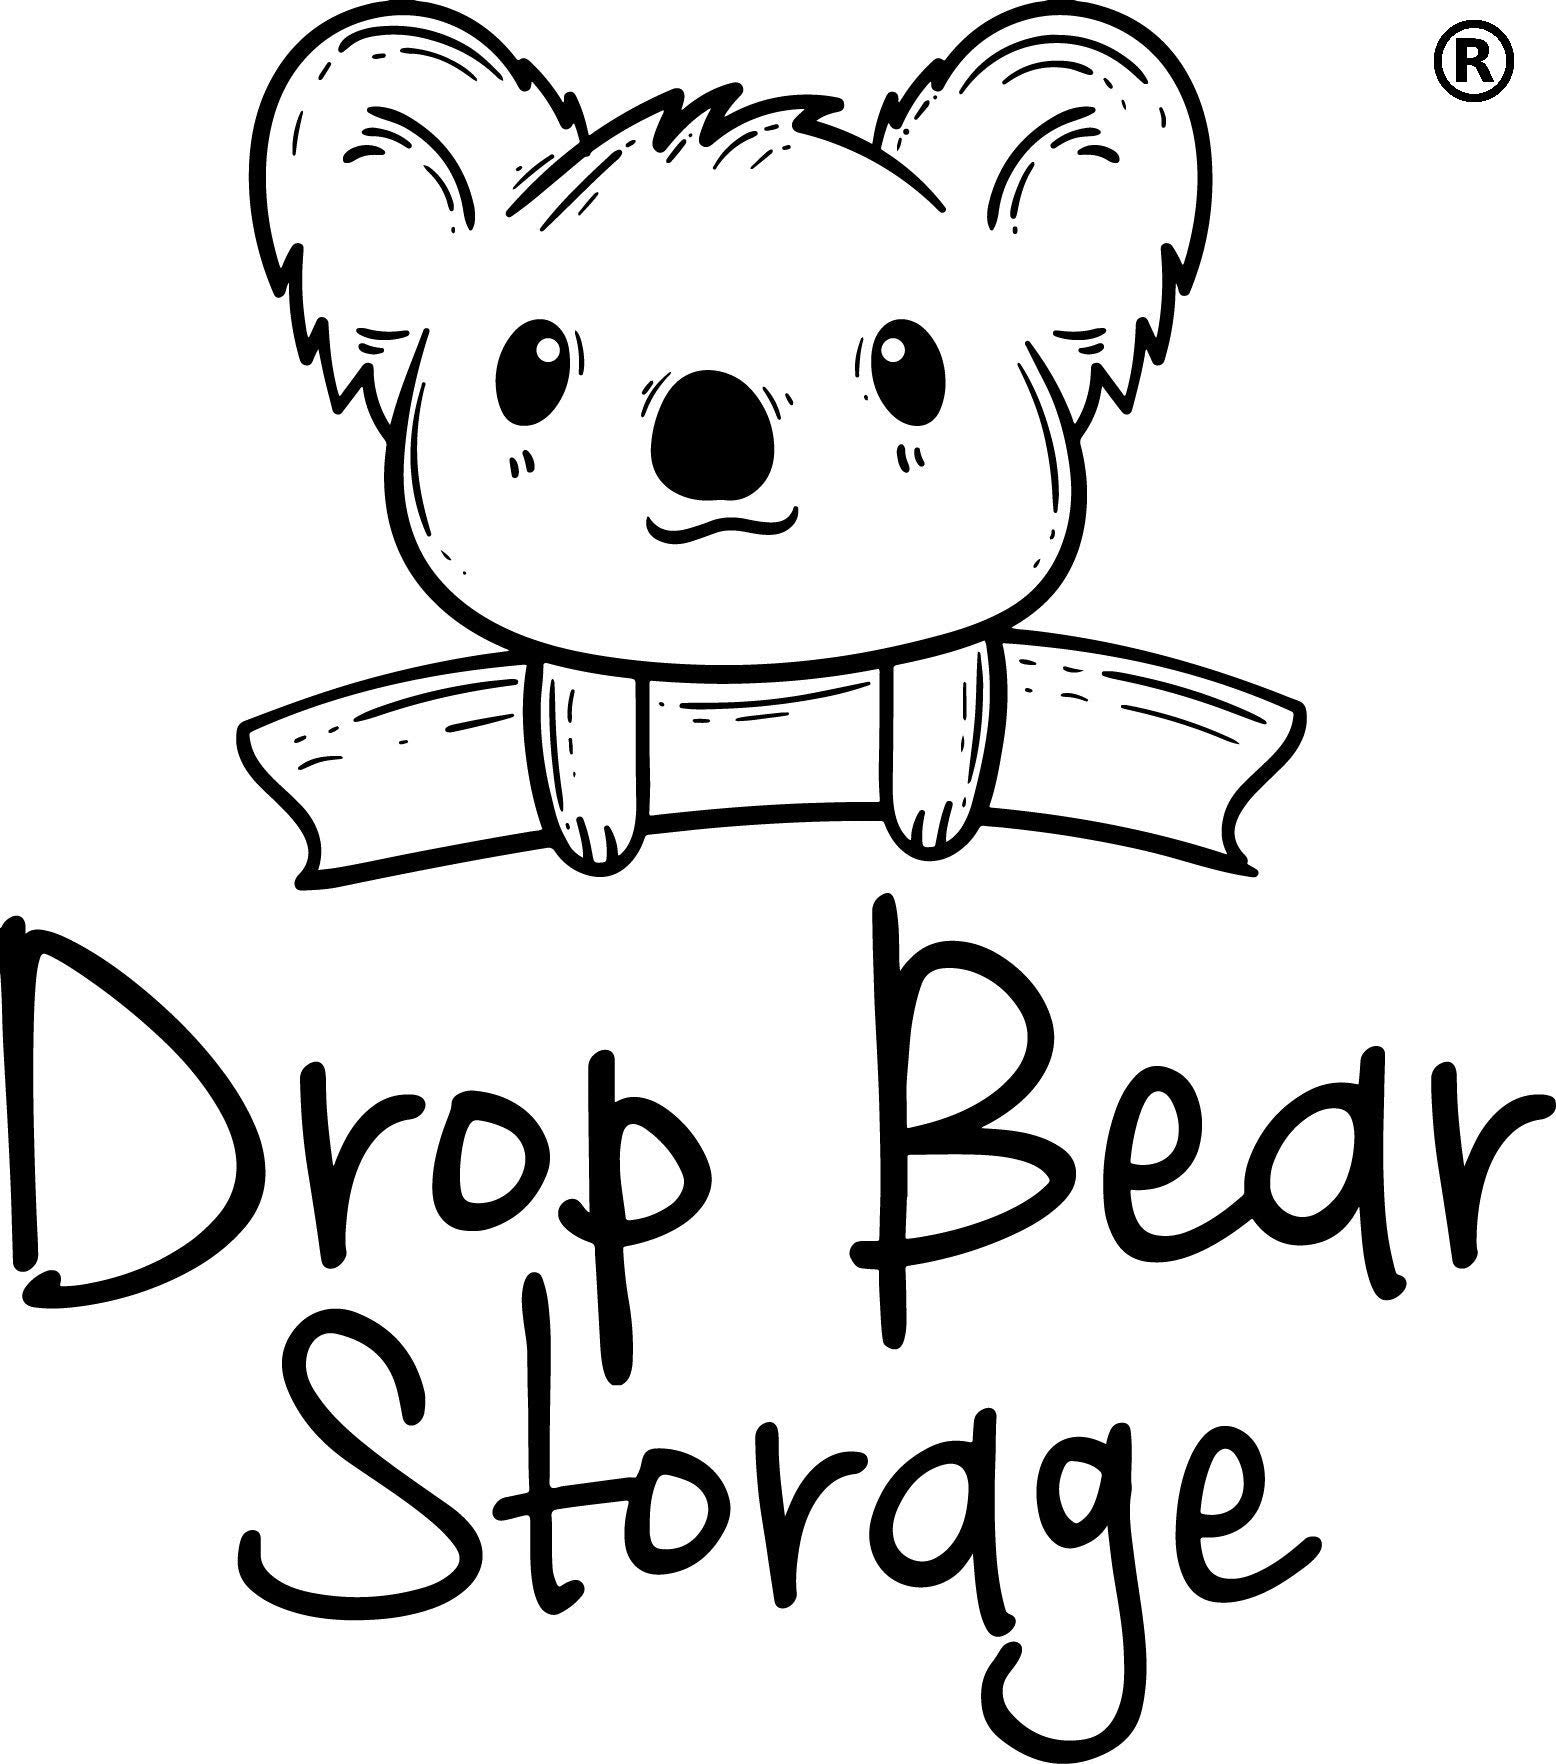 Drop Bear Storage – Ashmores Caravan Services & Accessories